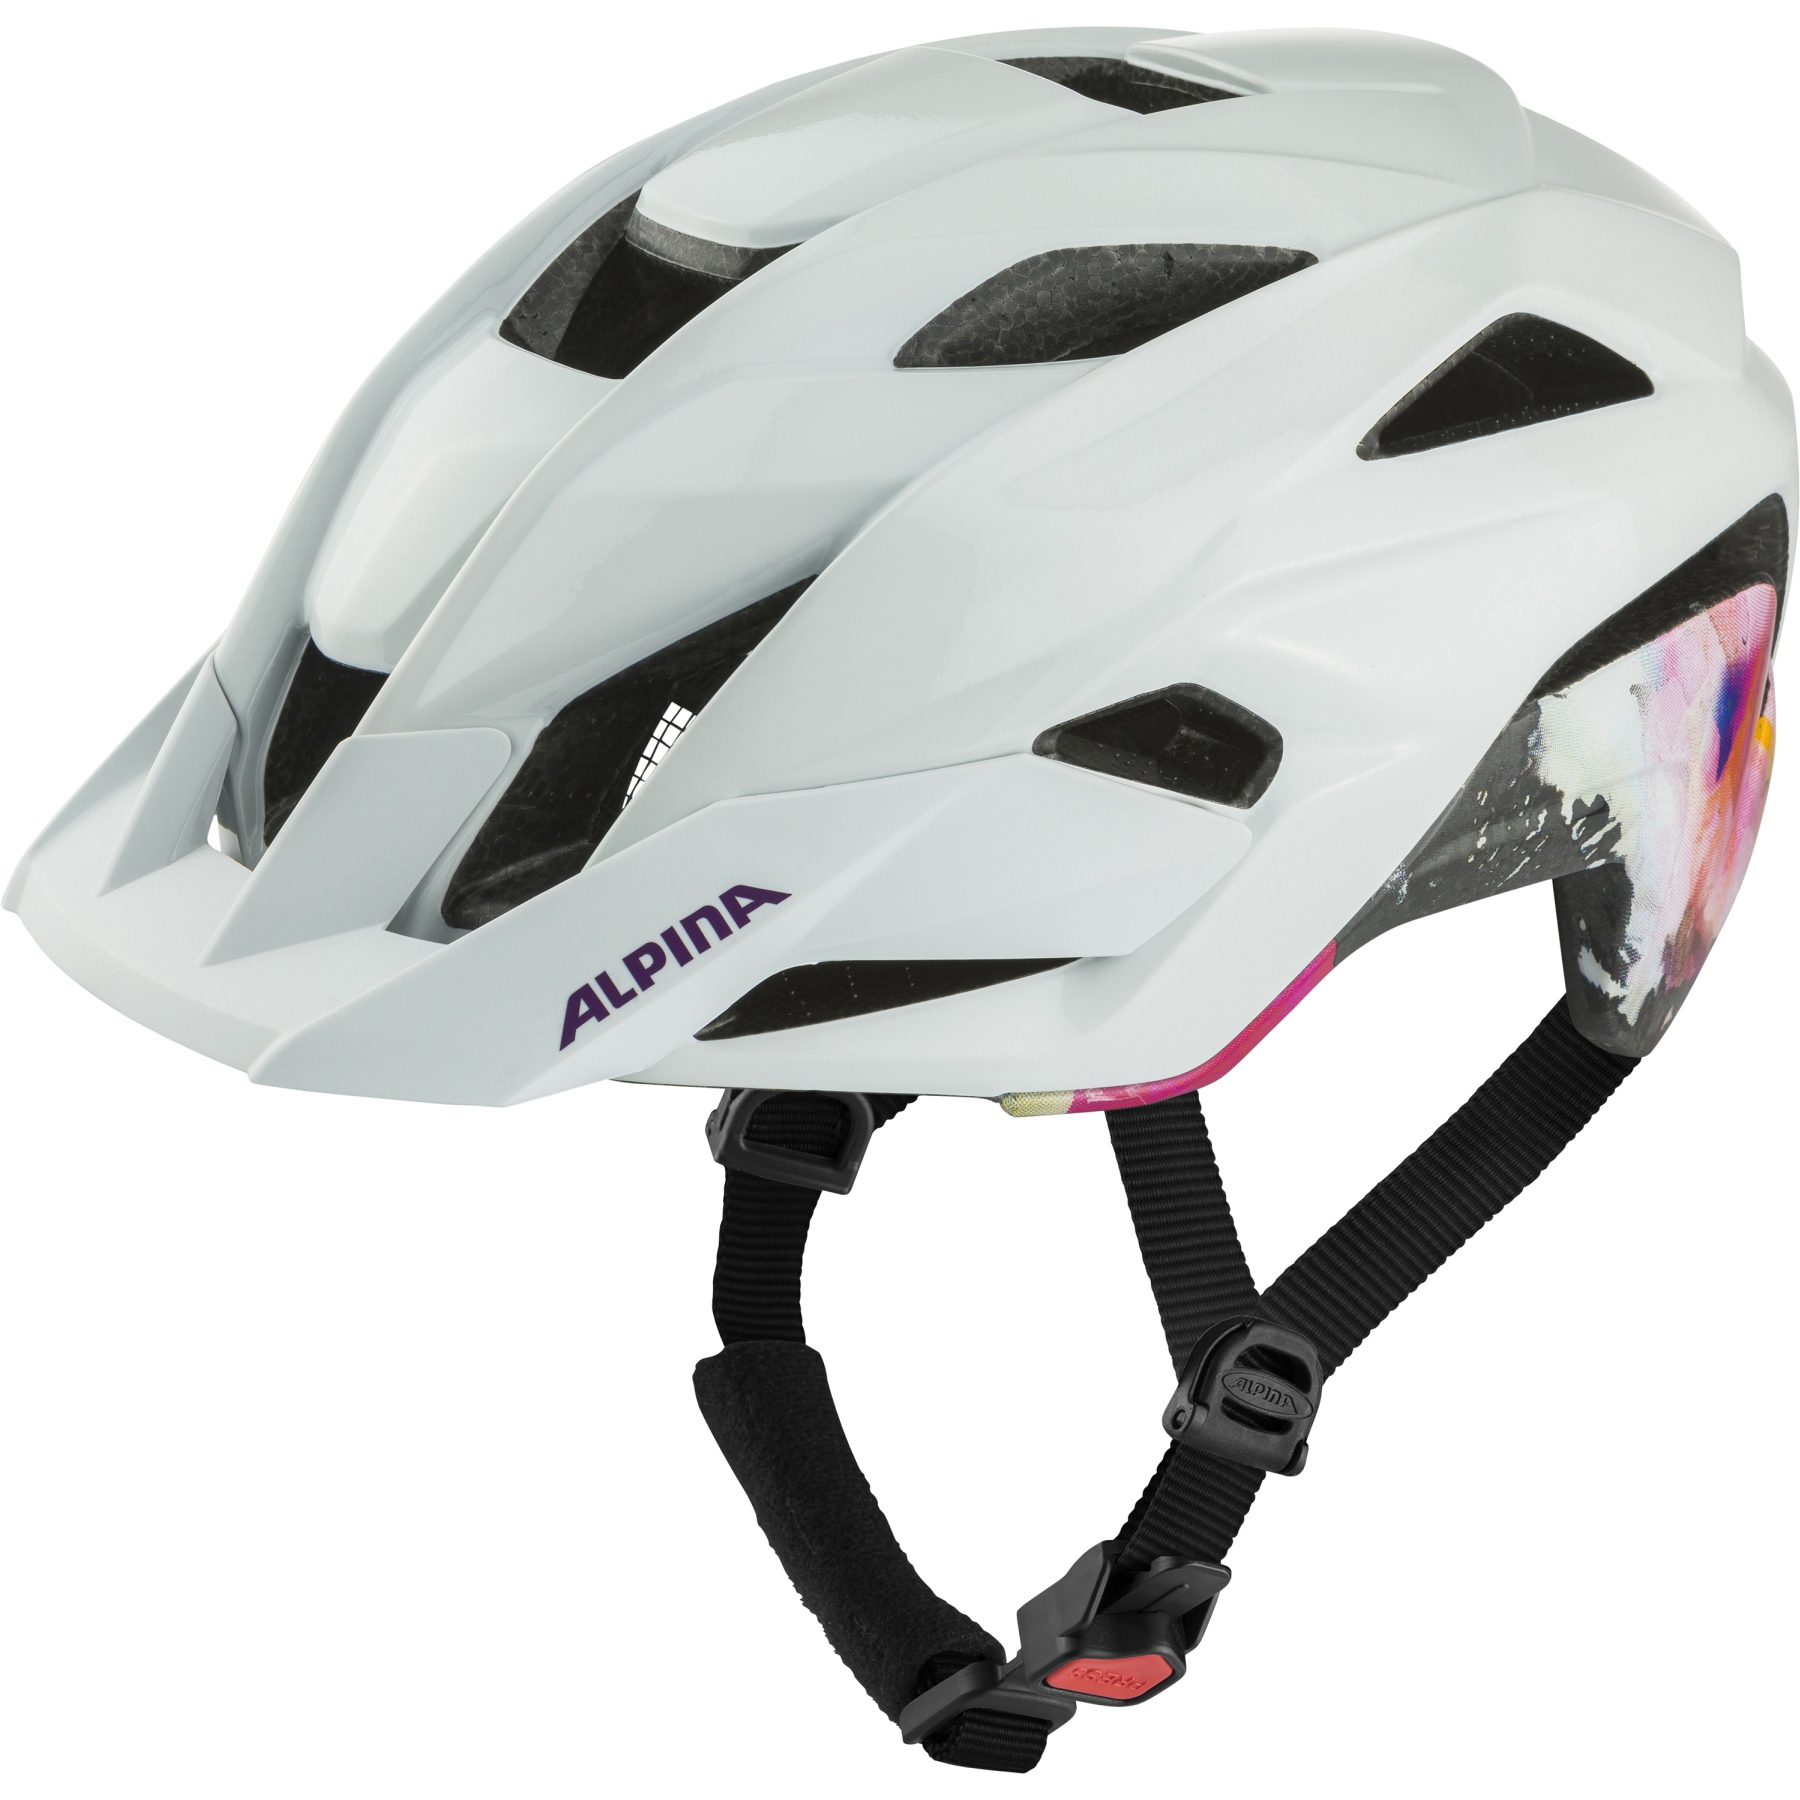 Picture of Alpina Kamloop Bike Helmet - Michael Cina white gloss